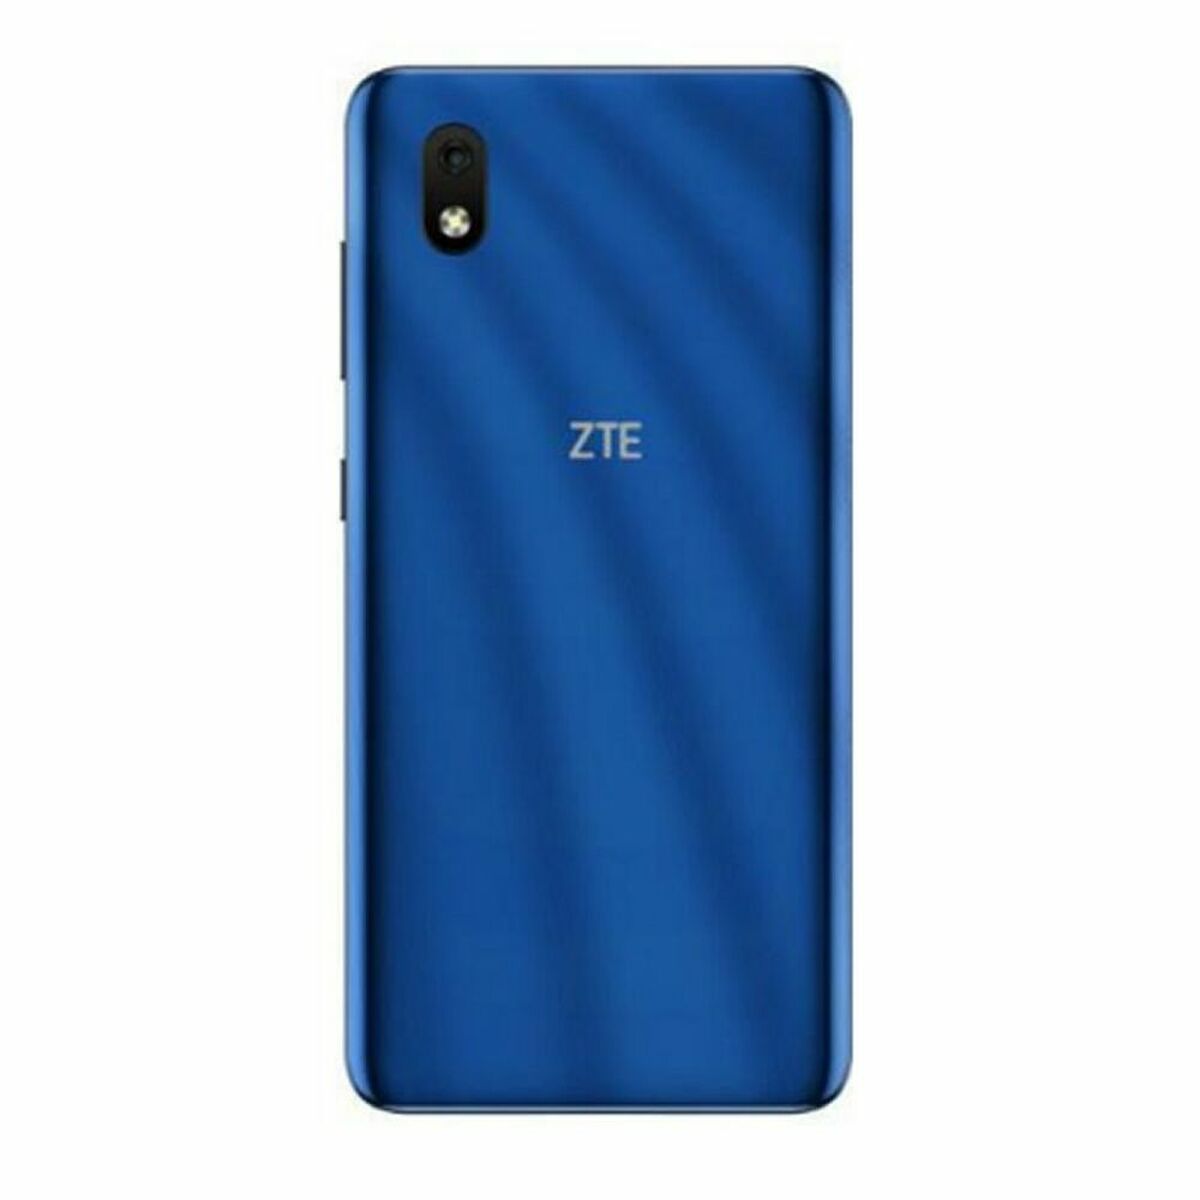 Smartphone ZTE 1GB/32GB 1,4 GHz Spreadtrum 1 GB RAM 32 GB Bleu 5" (Reconditionné B)